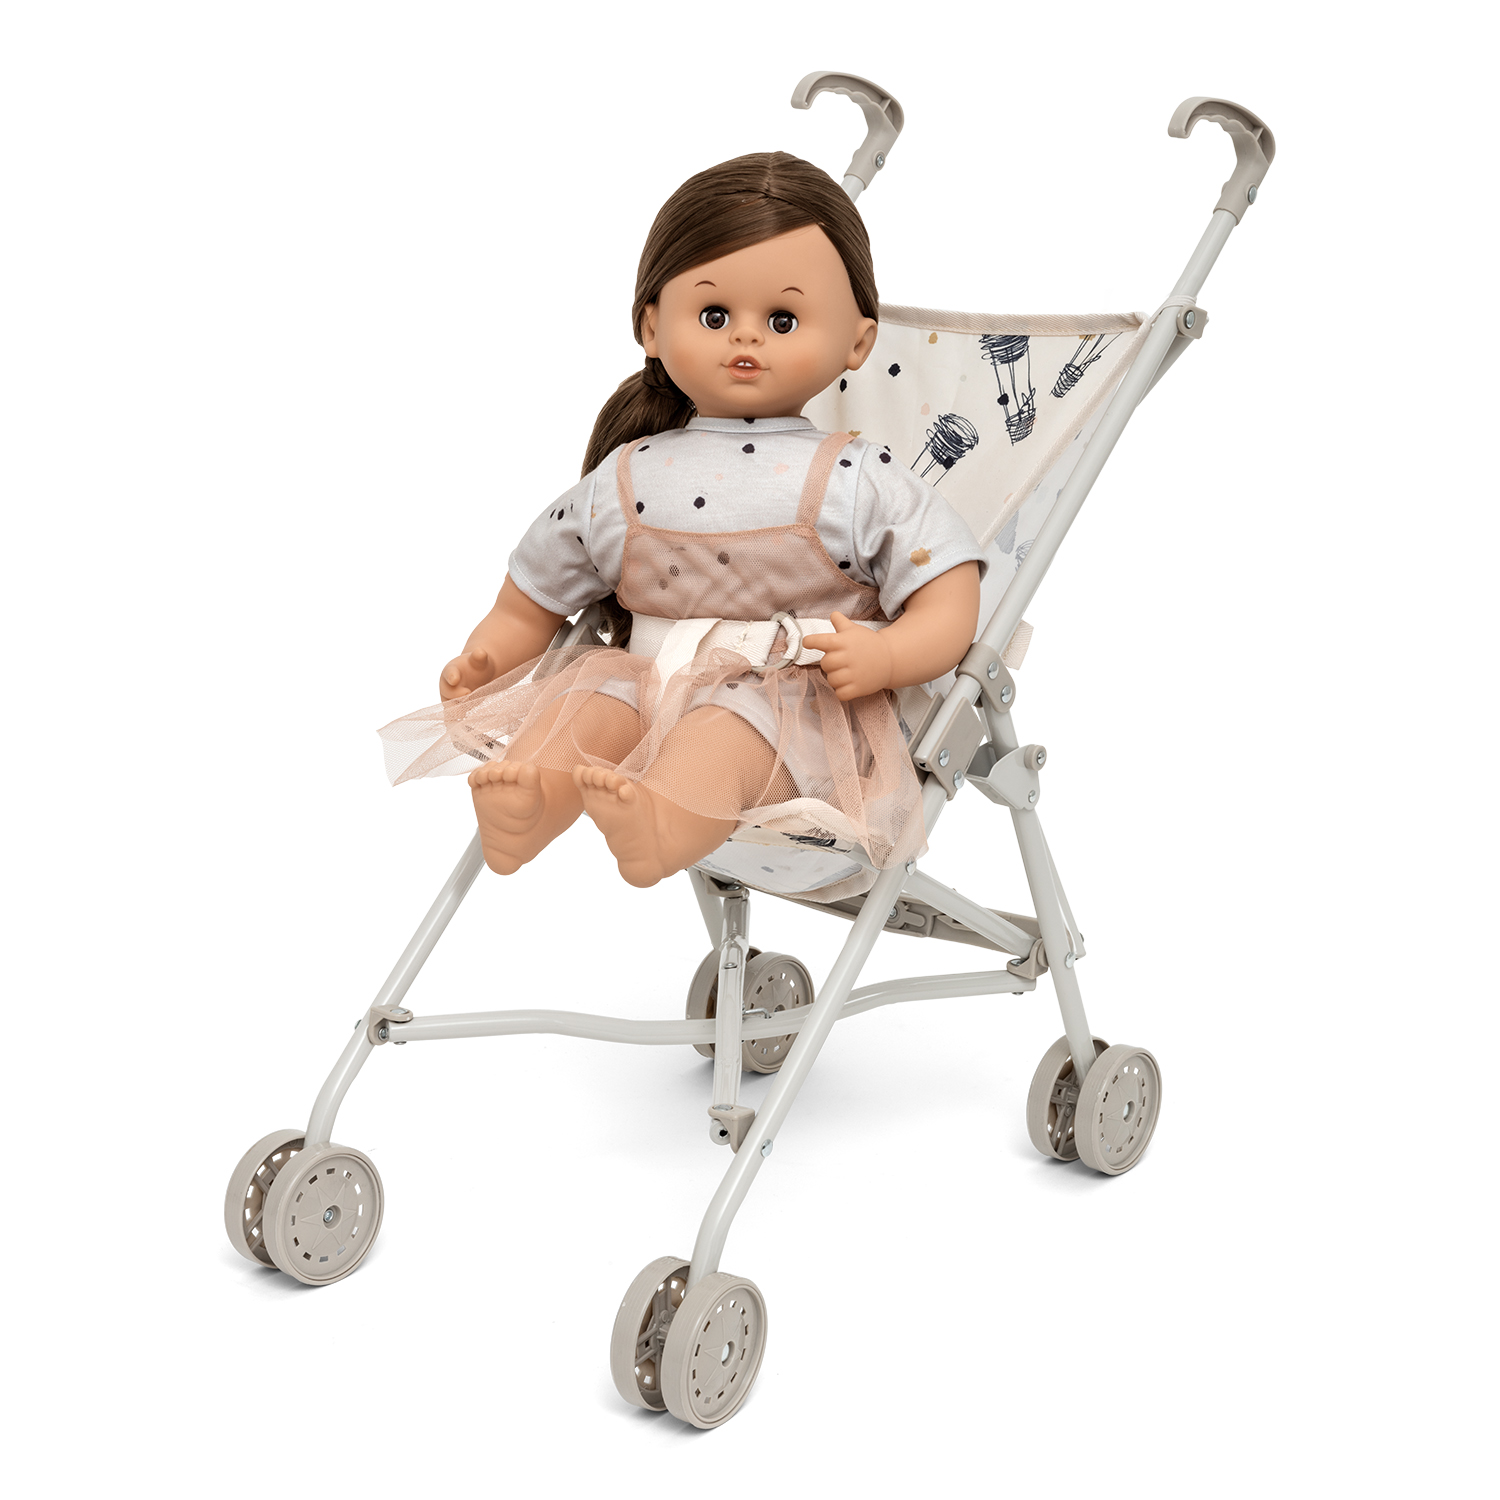 Doll prams & doll pushchairs skrållan doll pram pushchair